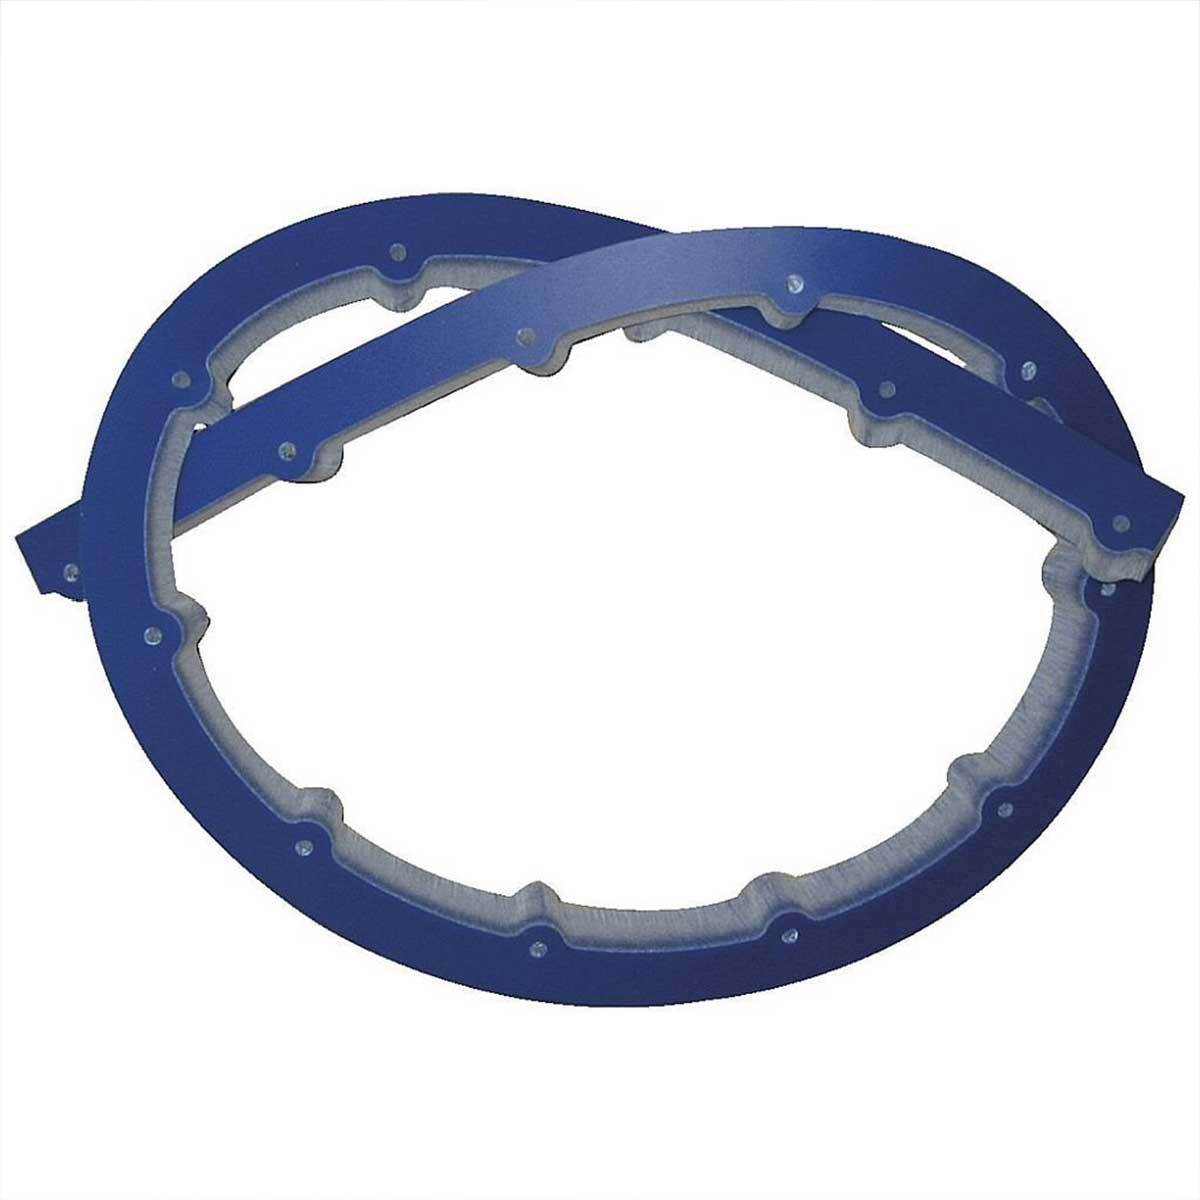 Fisch Tools Kurvenlinfix flexible template for routing fair curves, curled into a pretzel shape to show flexibility.